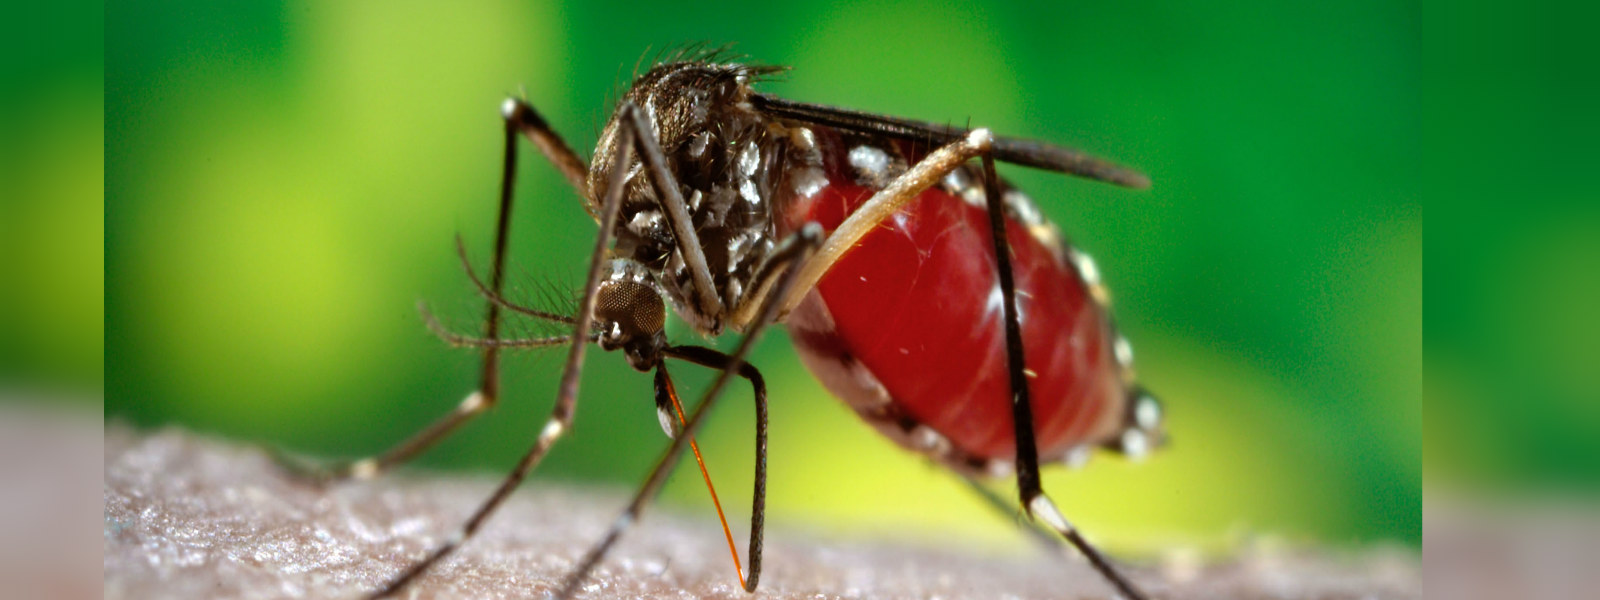 17,417 dengue patients reported in 2020